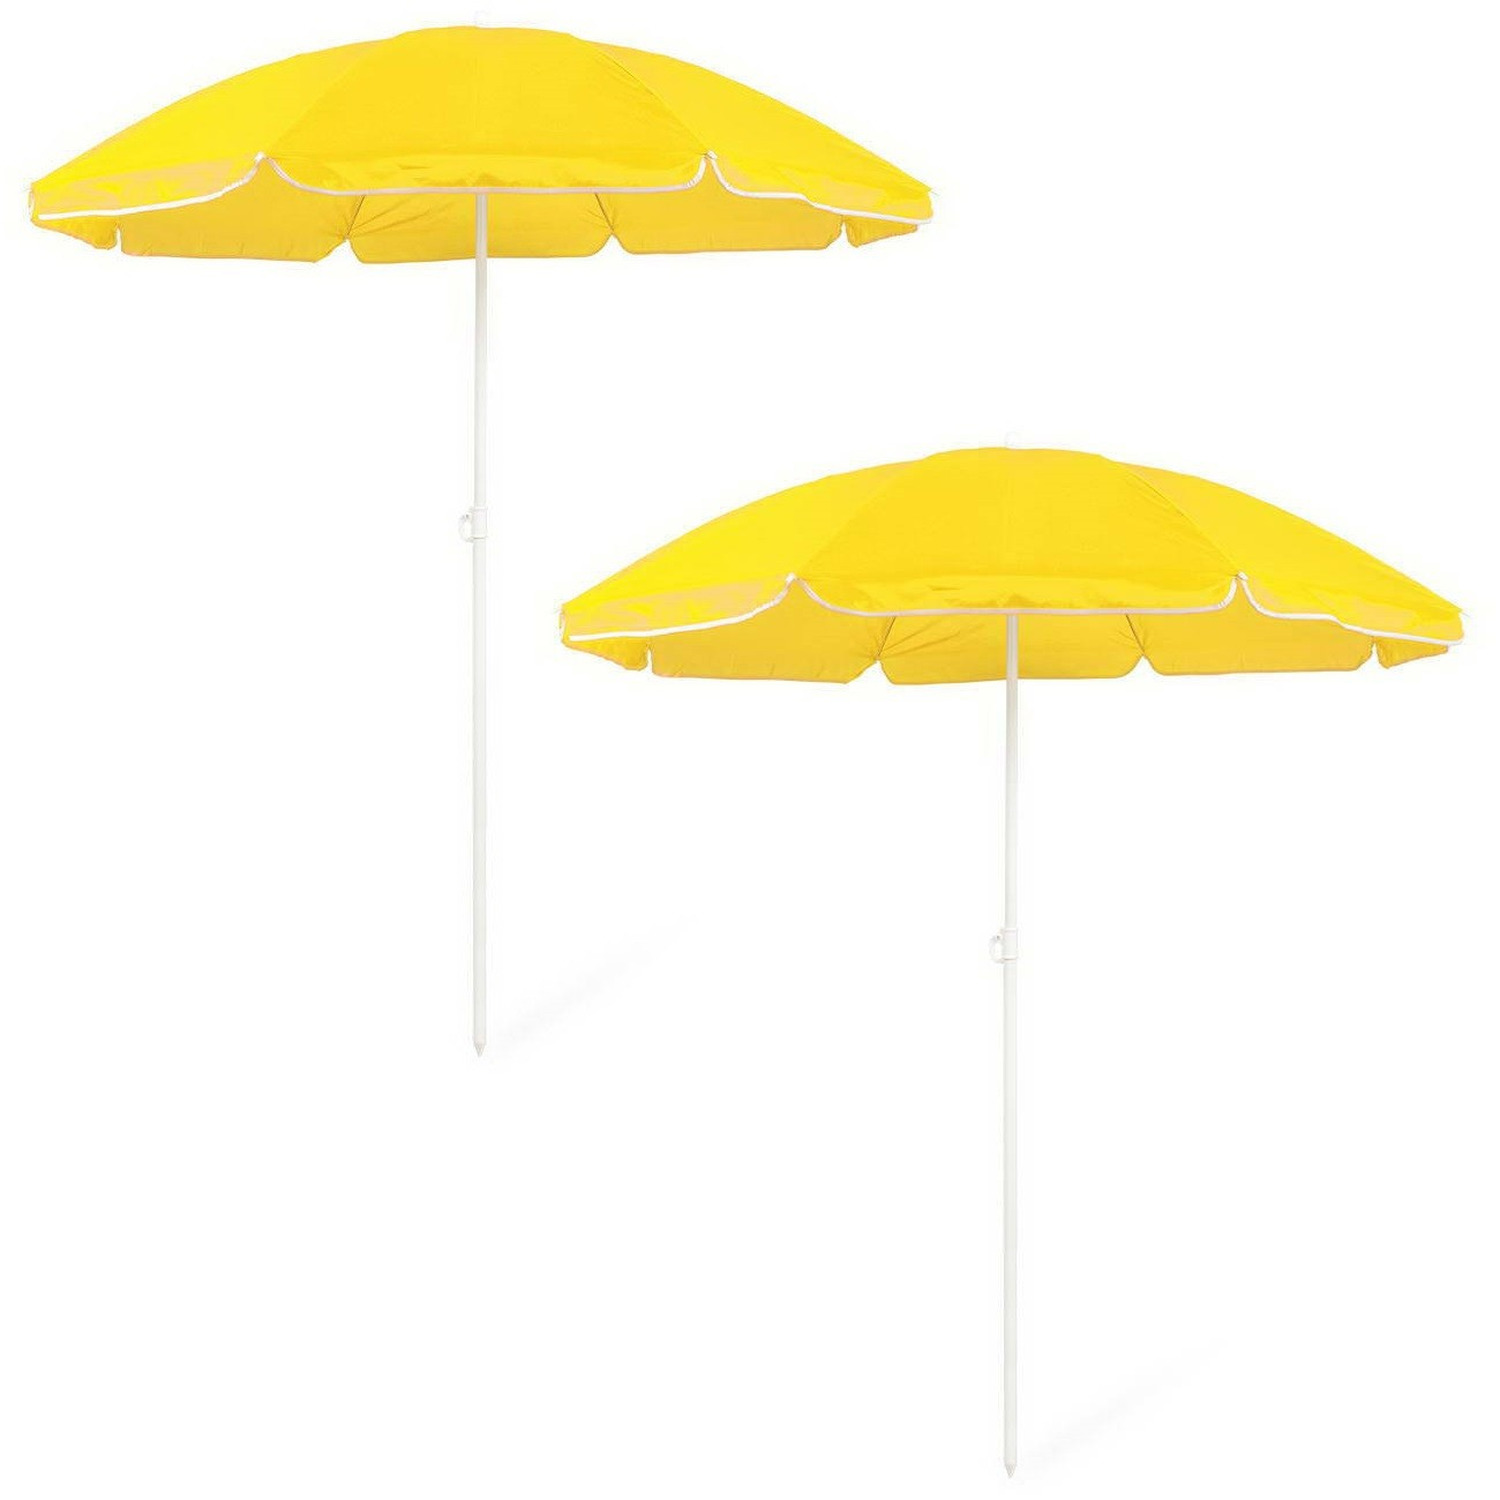 Voordeel set van 2x strandparasols geel 150 cm diameter